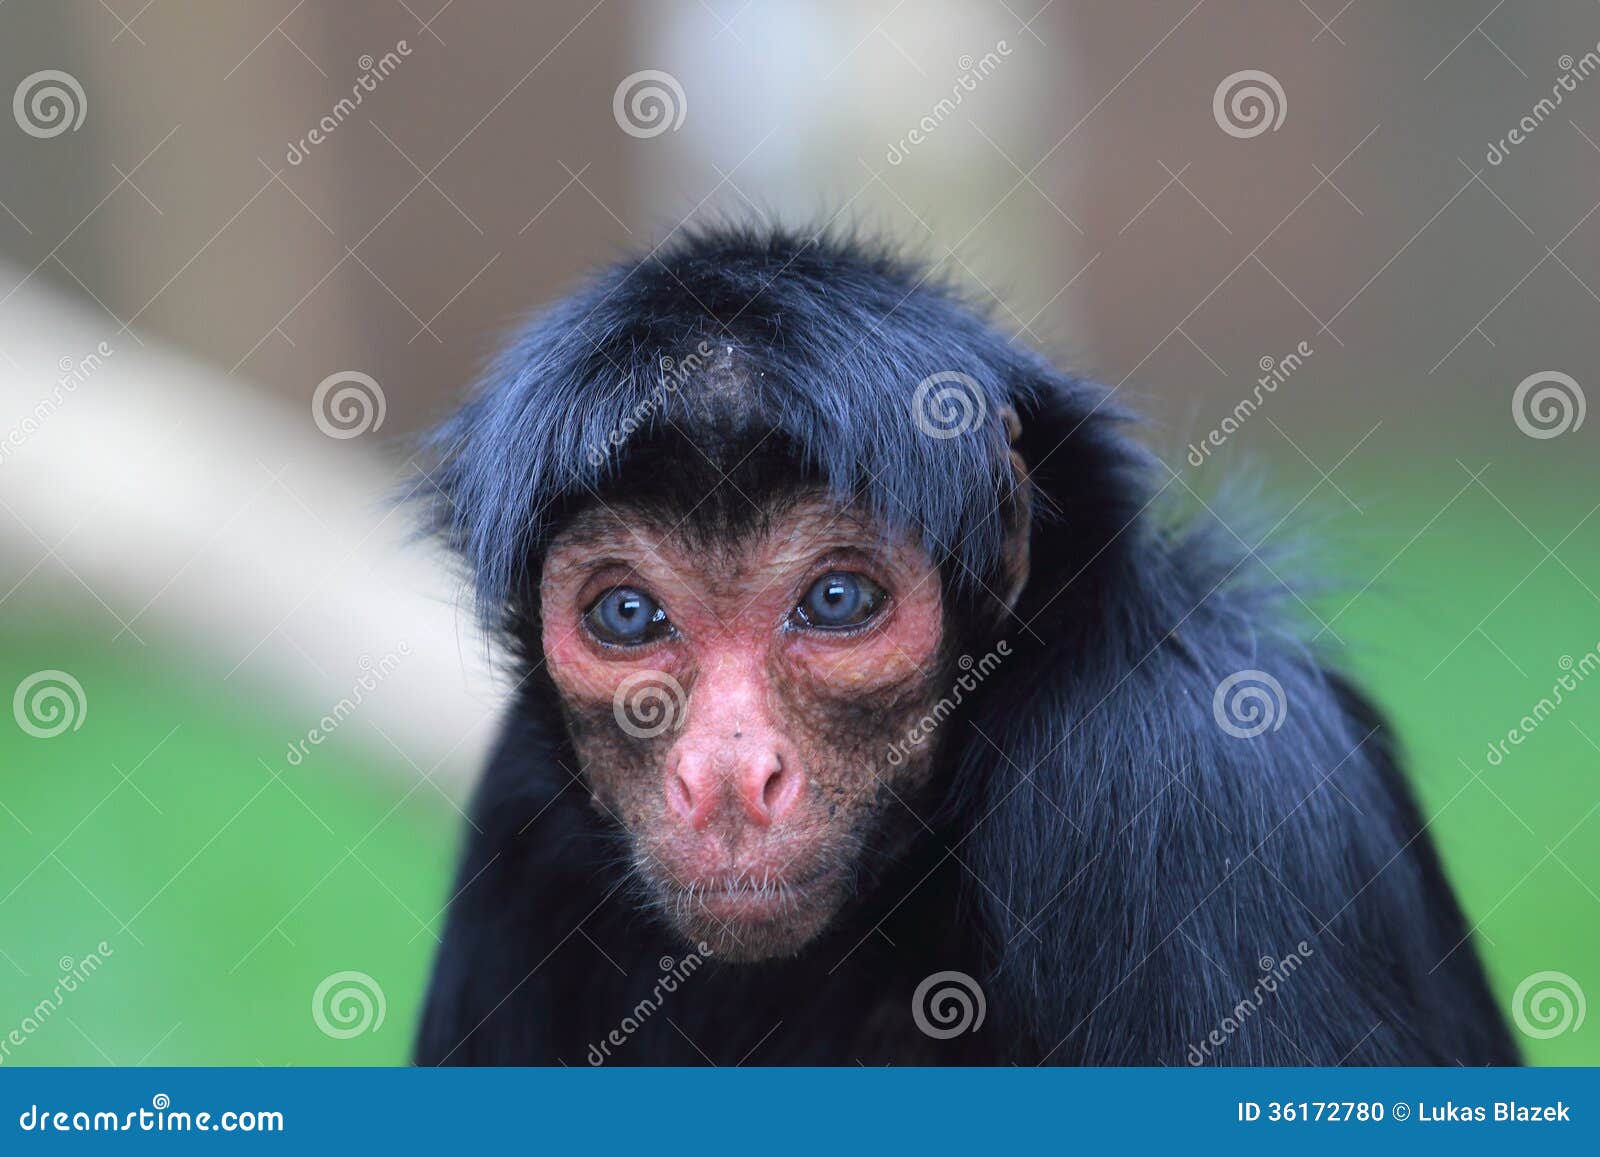 guiana spider monkey